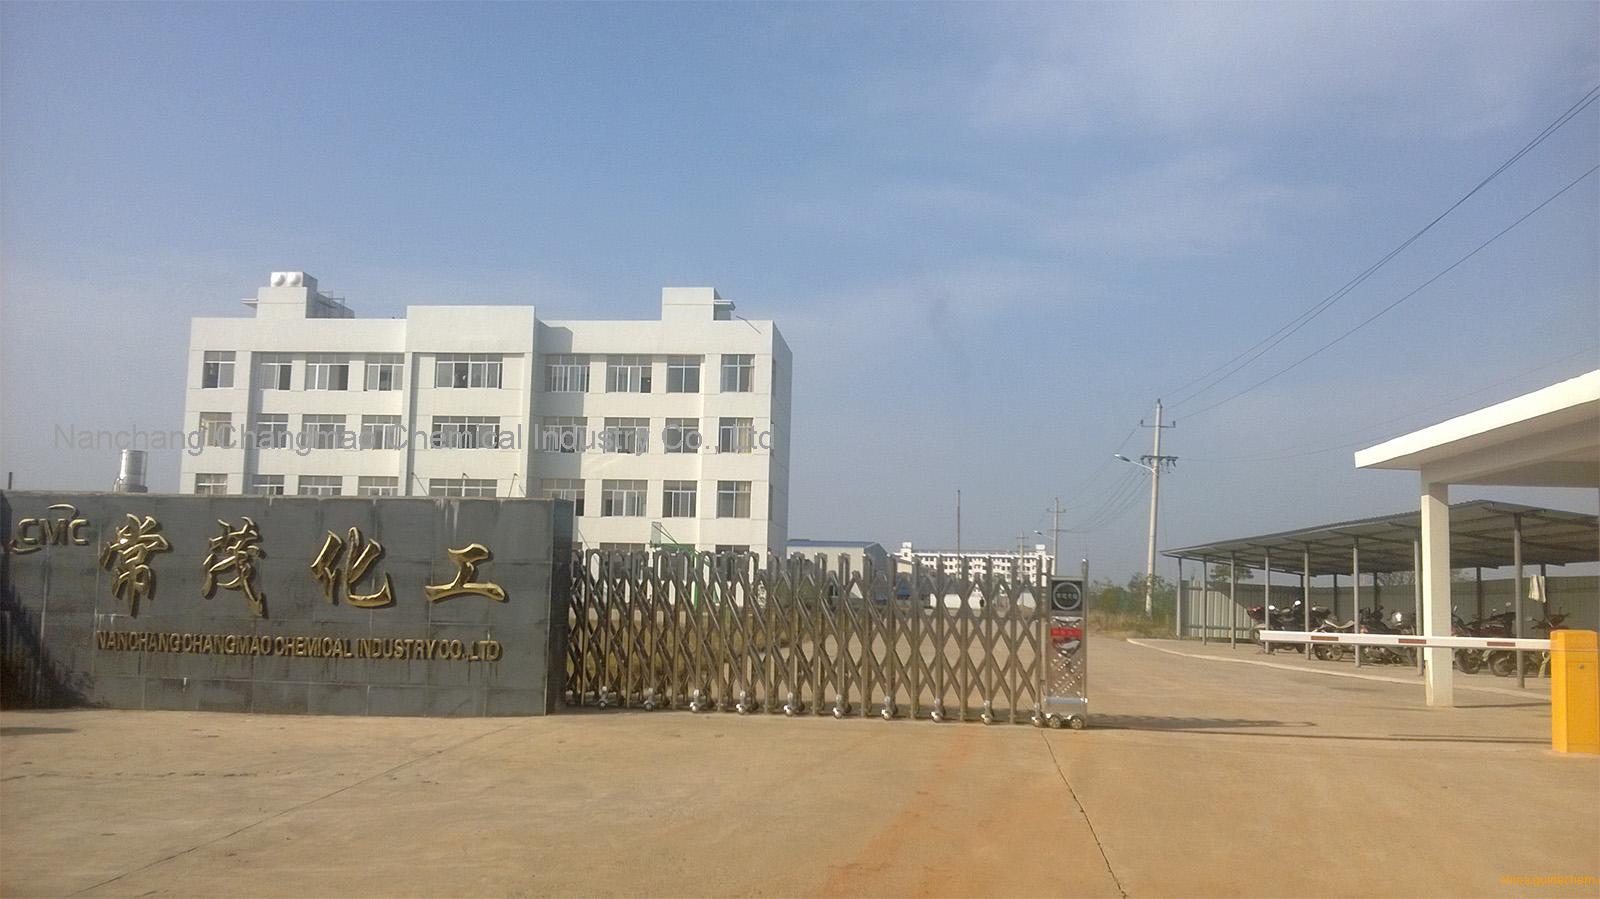 Nanchang Changmao Chemical Industry Co., Ltd